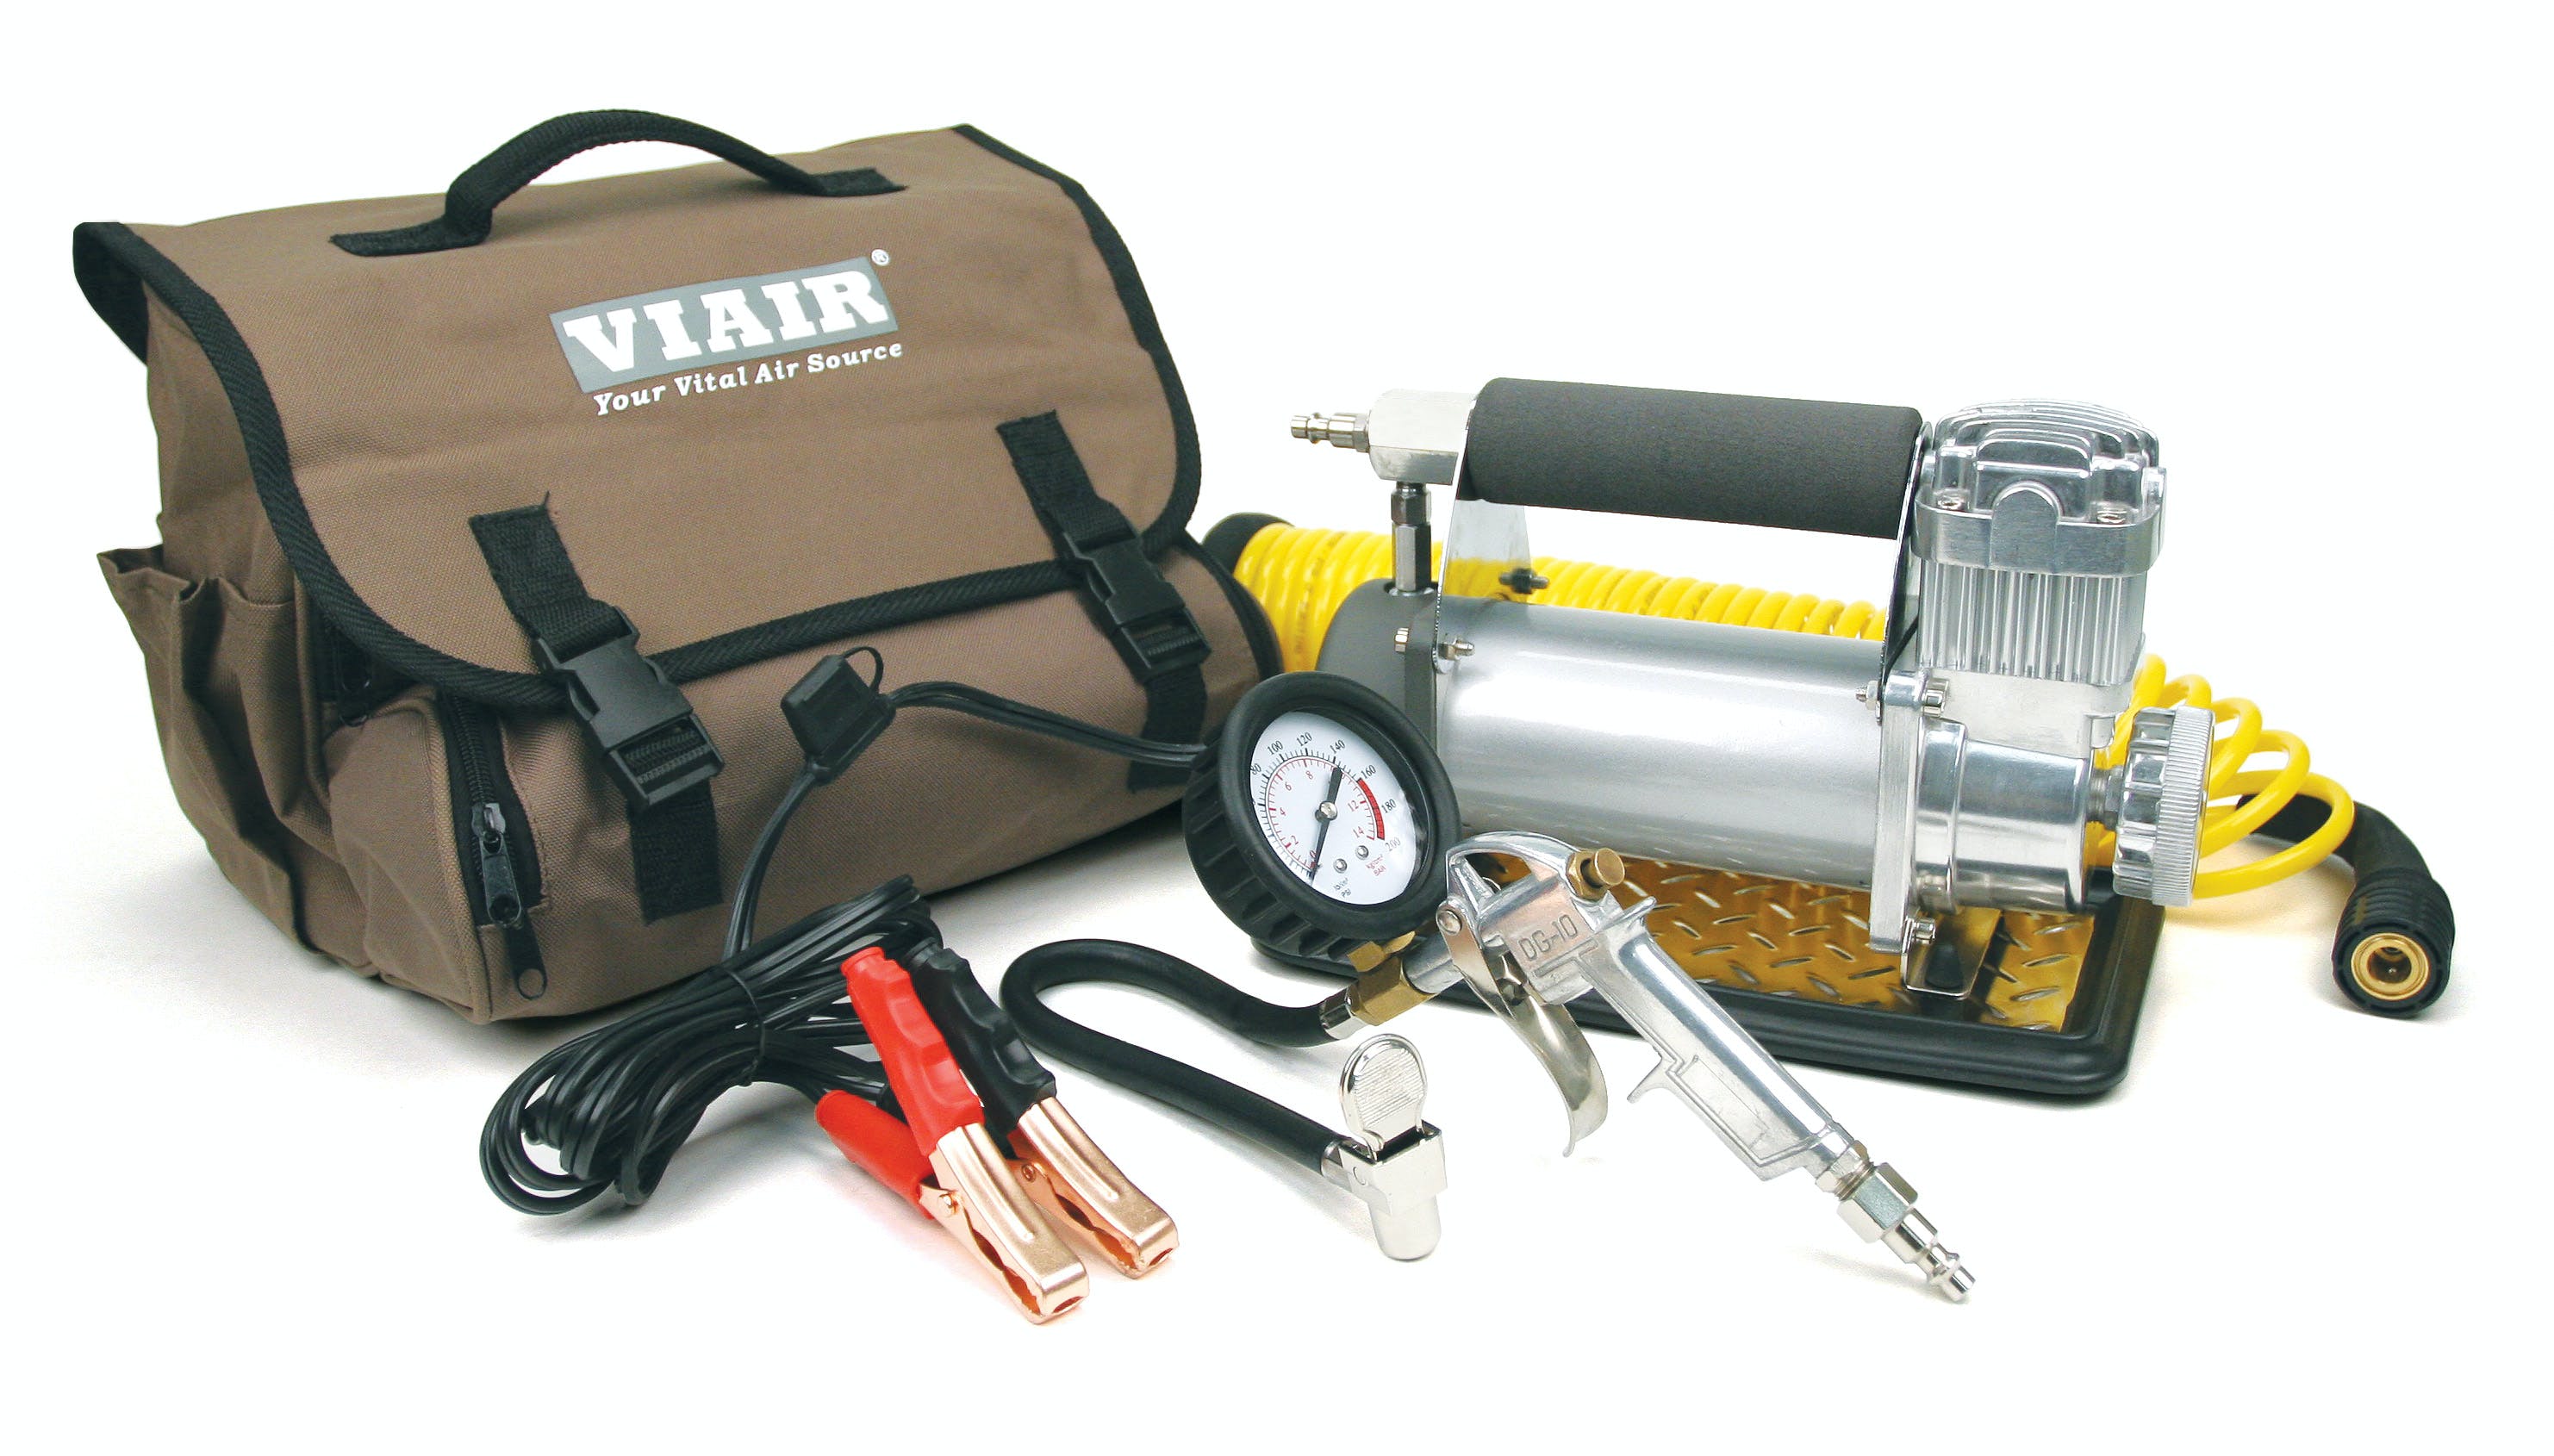 VIAIR 40045 400P-A Automatic Portable Compressor Kit 33% Duty  40 Min. @ 30 psi